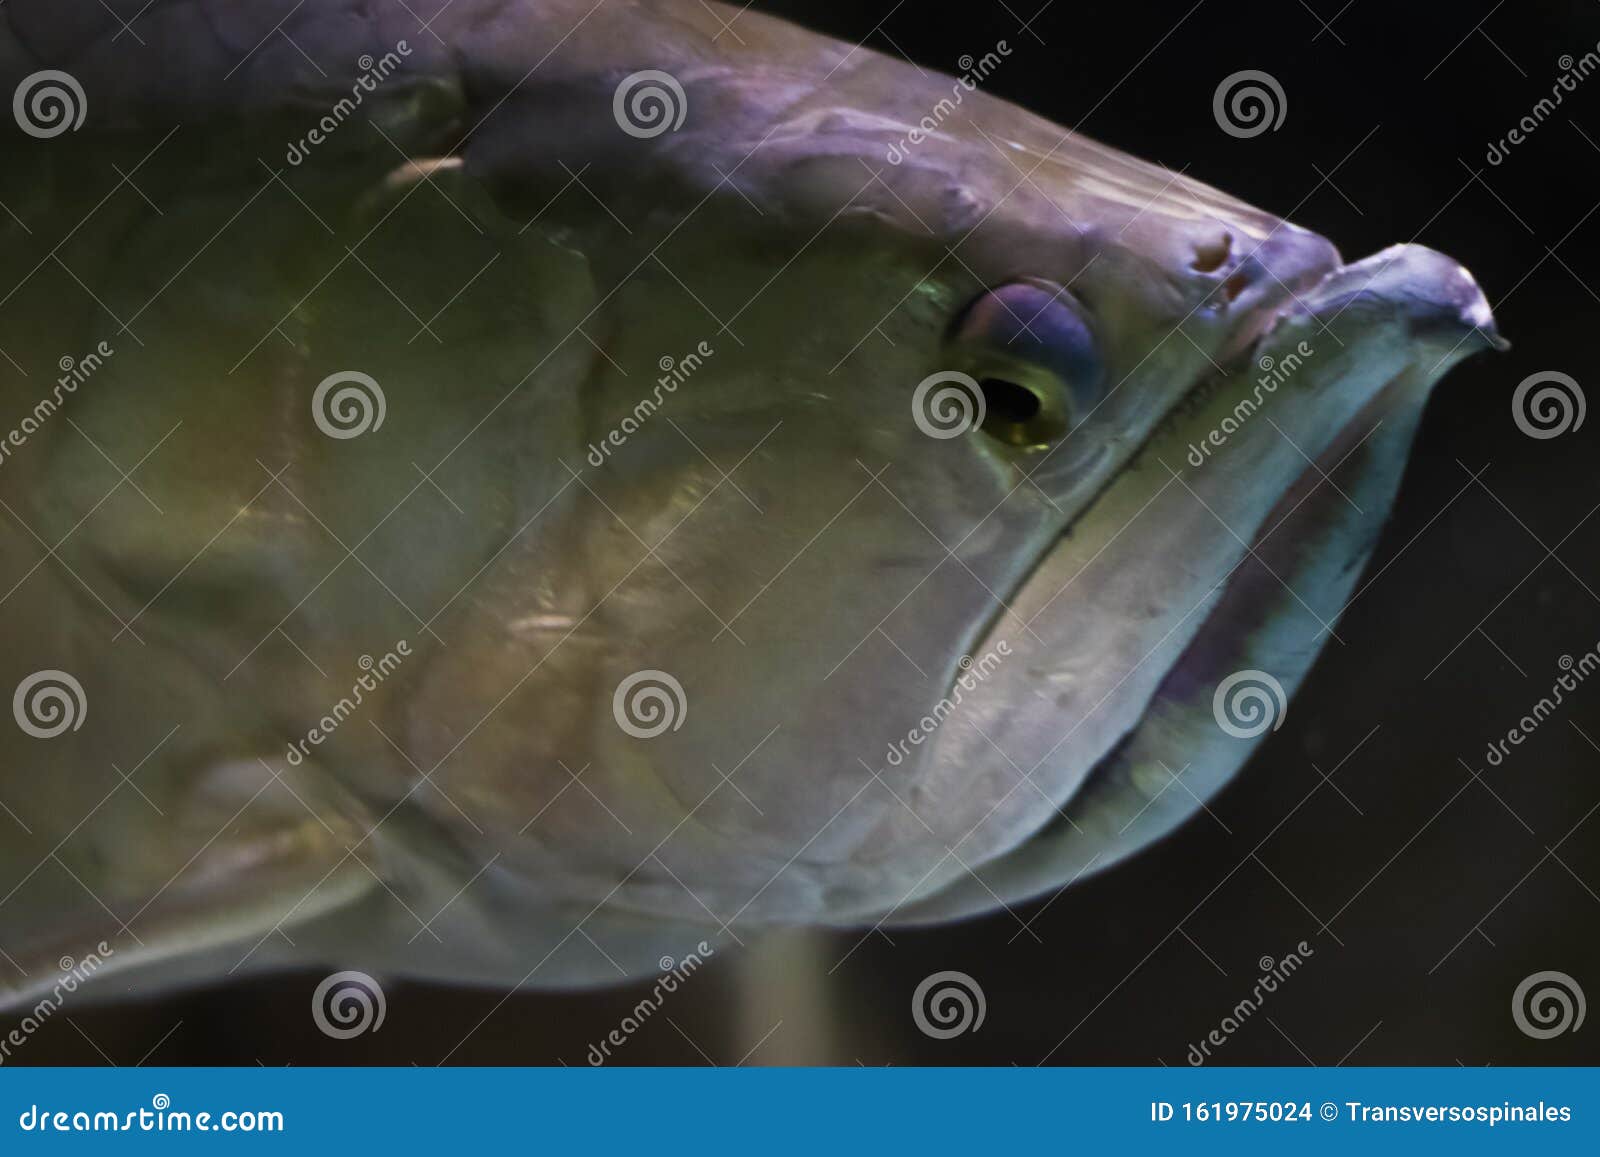 https://thumbs.dreamstime.com/z/close-up-portrait-shot-head-strange-ocean-fish-face-focus-dark-background-natural-environment-black-under-water-161975024.jpg